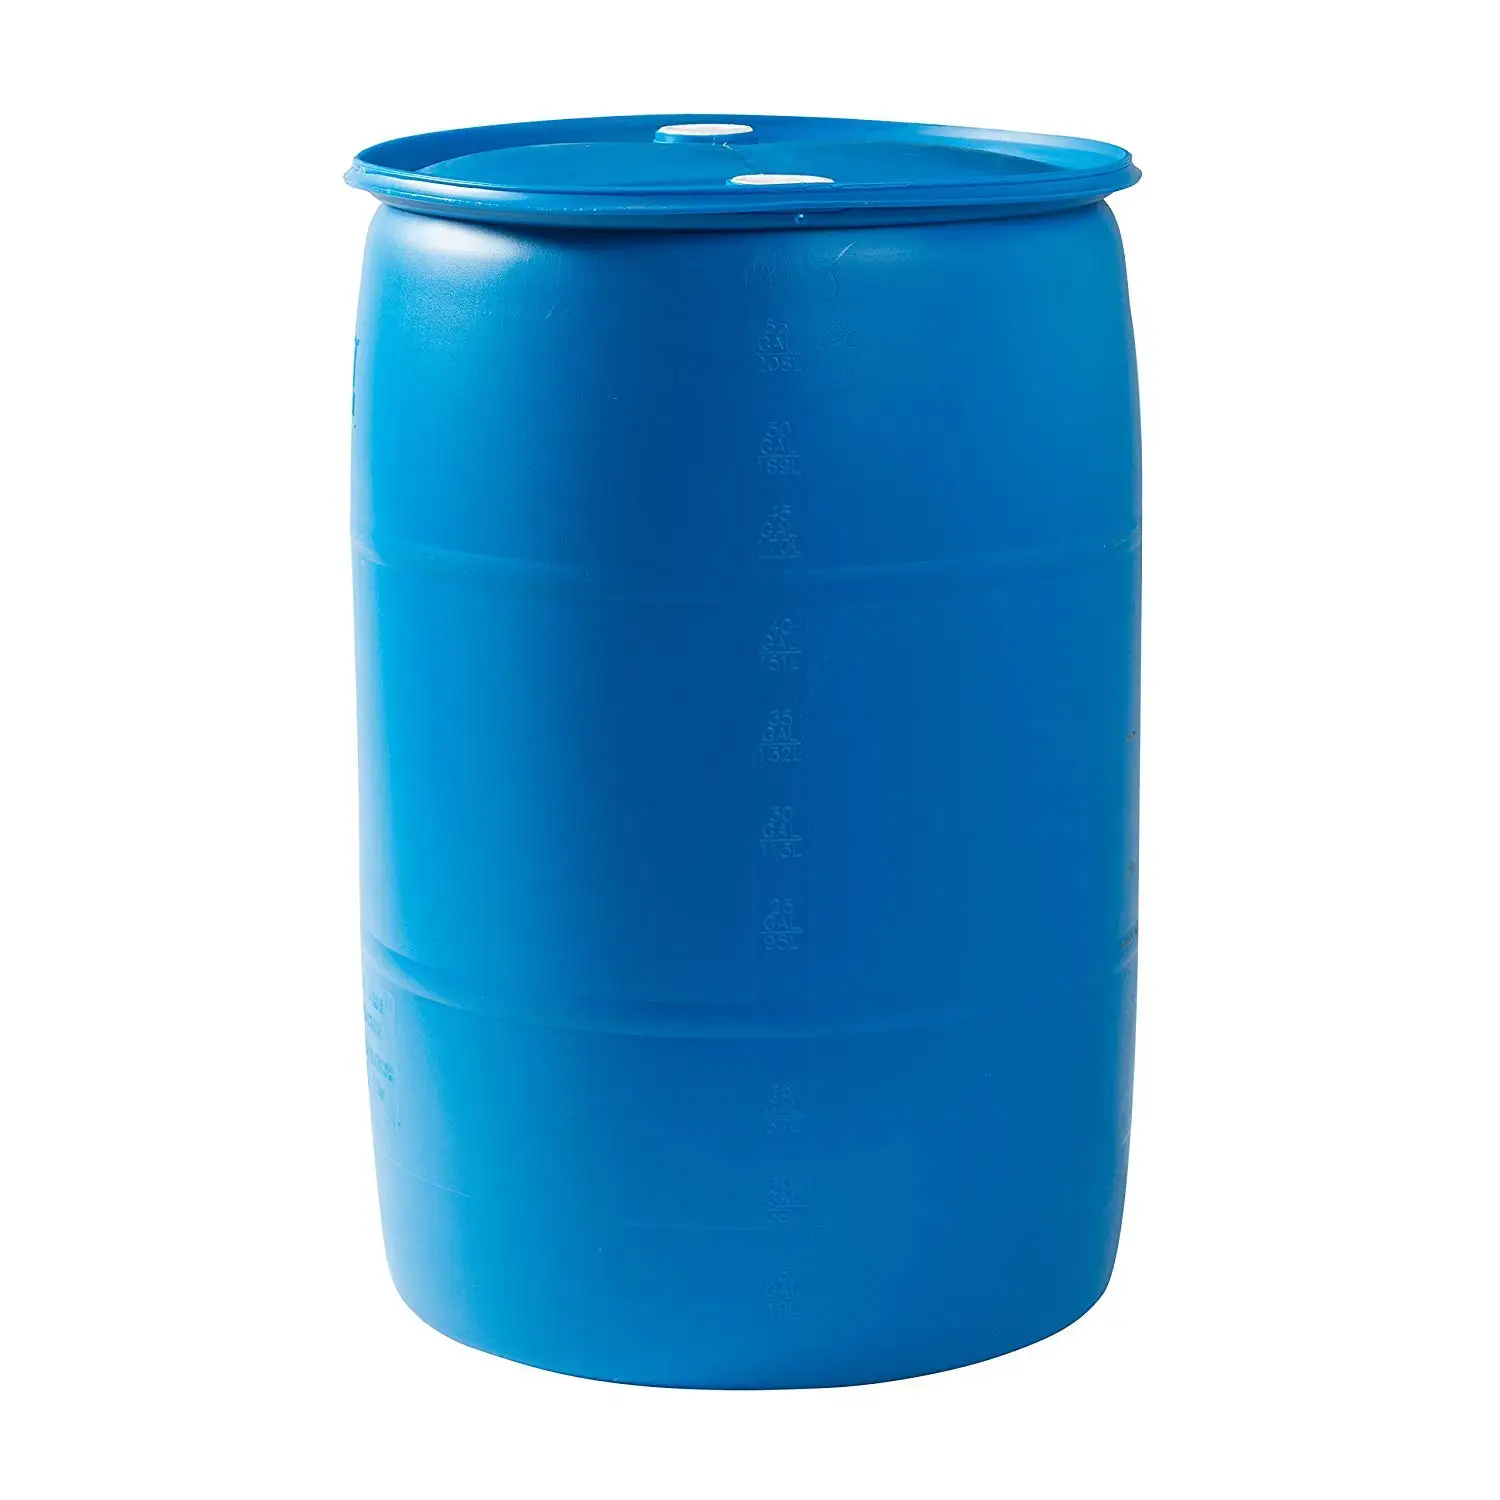 55 gallon plastic barrel drum 200L for chemical storage. 